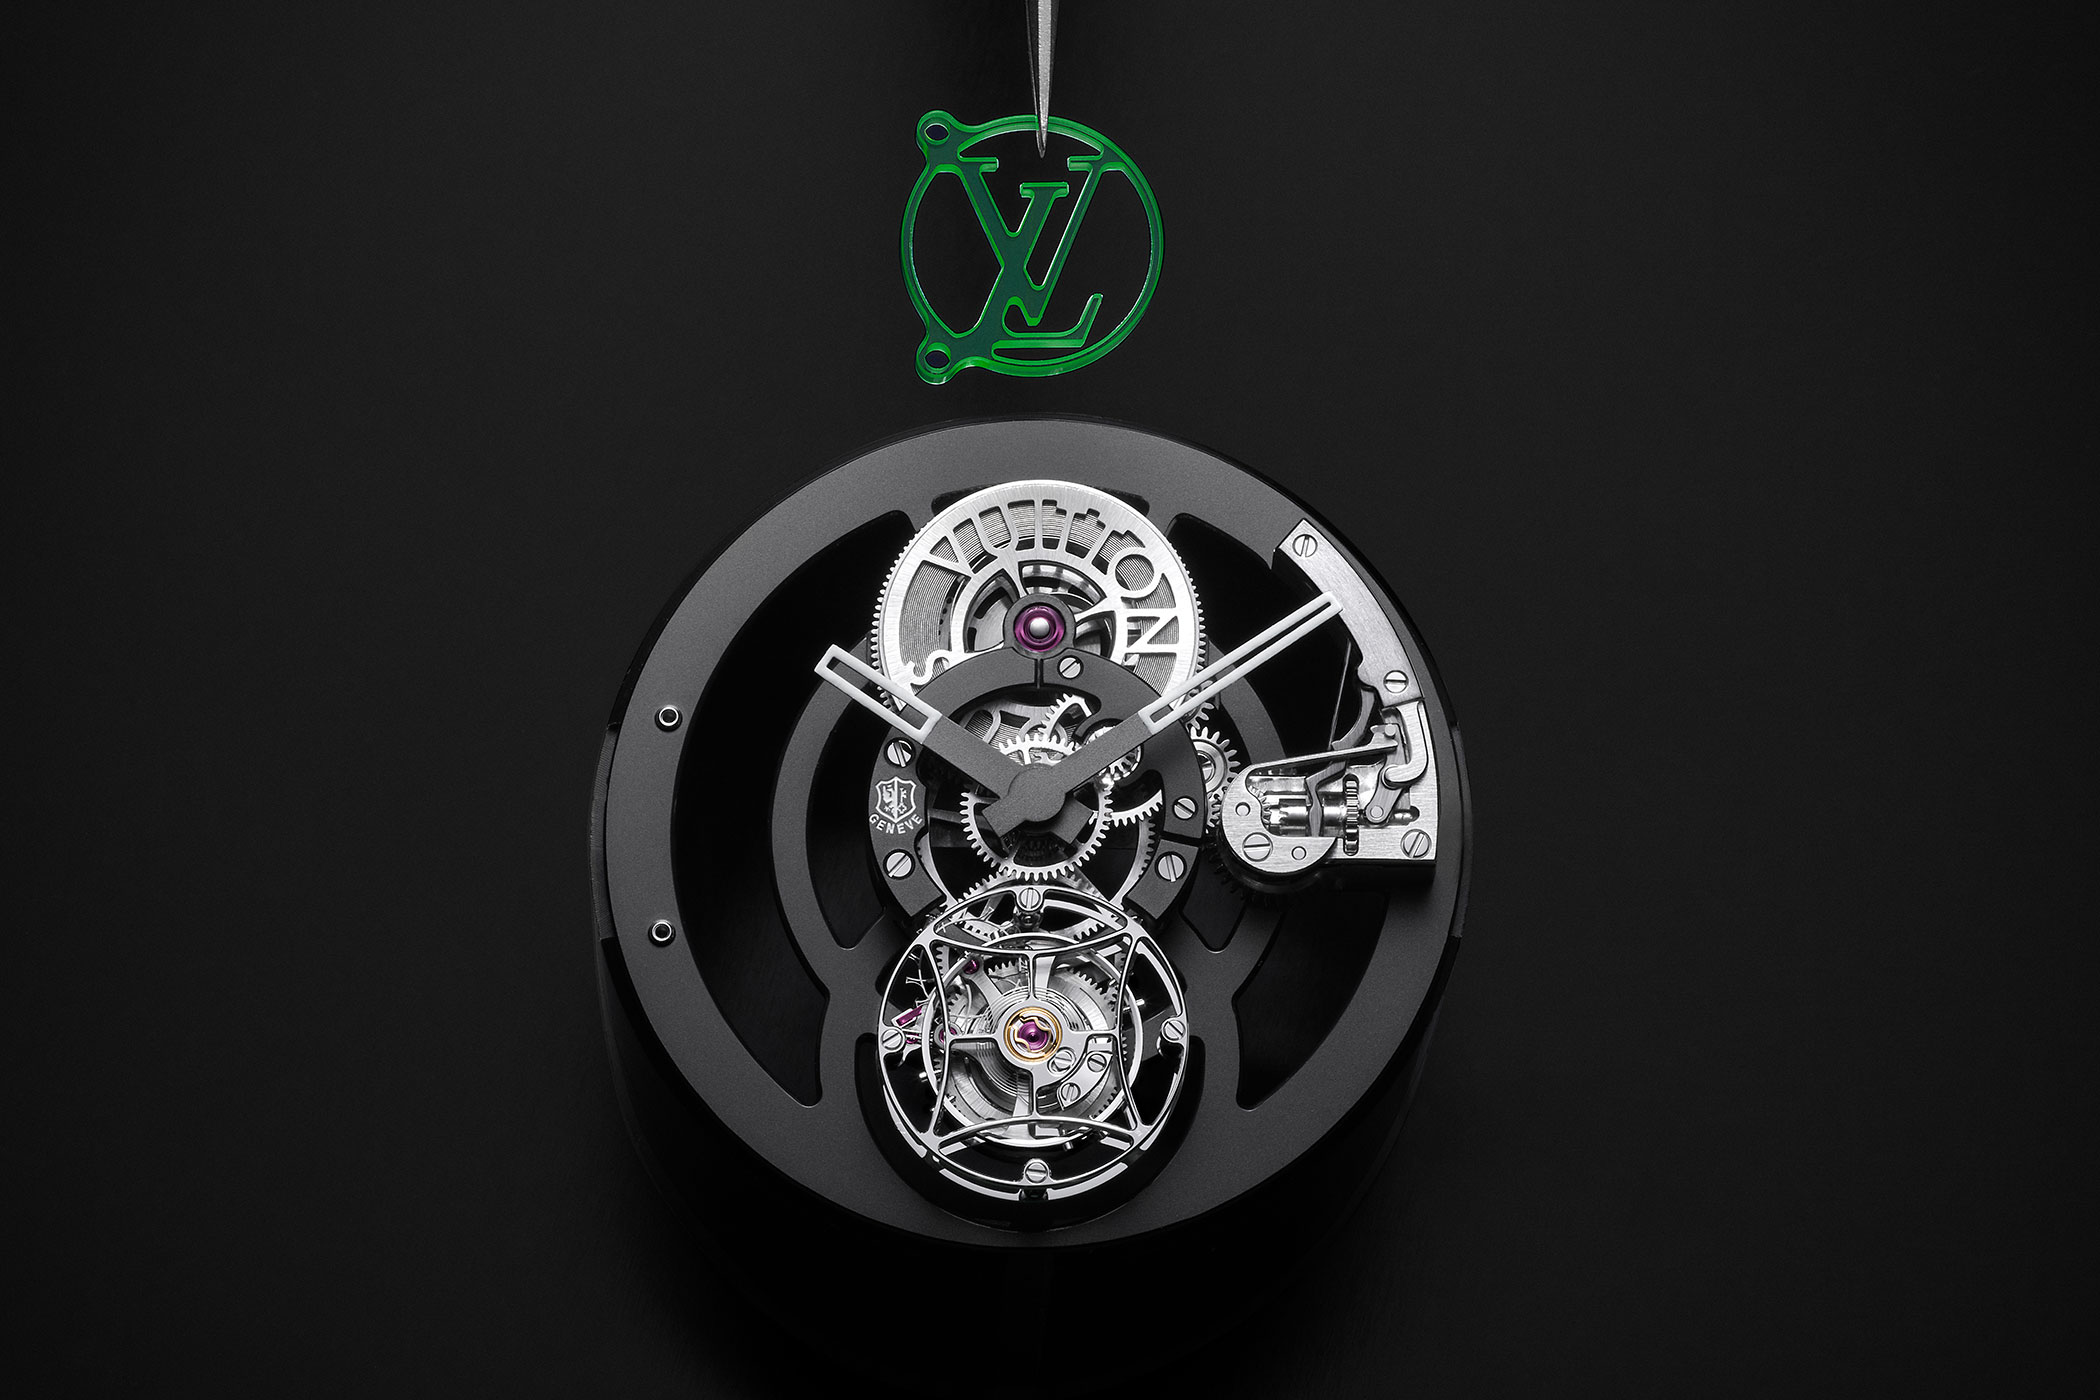 Louis Vuitton Reveals the Latest Tambour Moon Flying Tourbillon  Kaleidoscope Watch